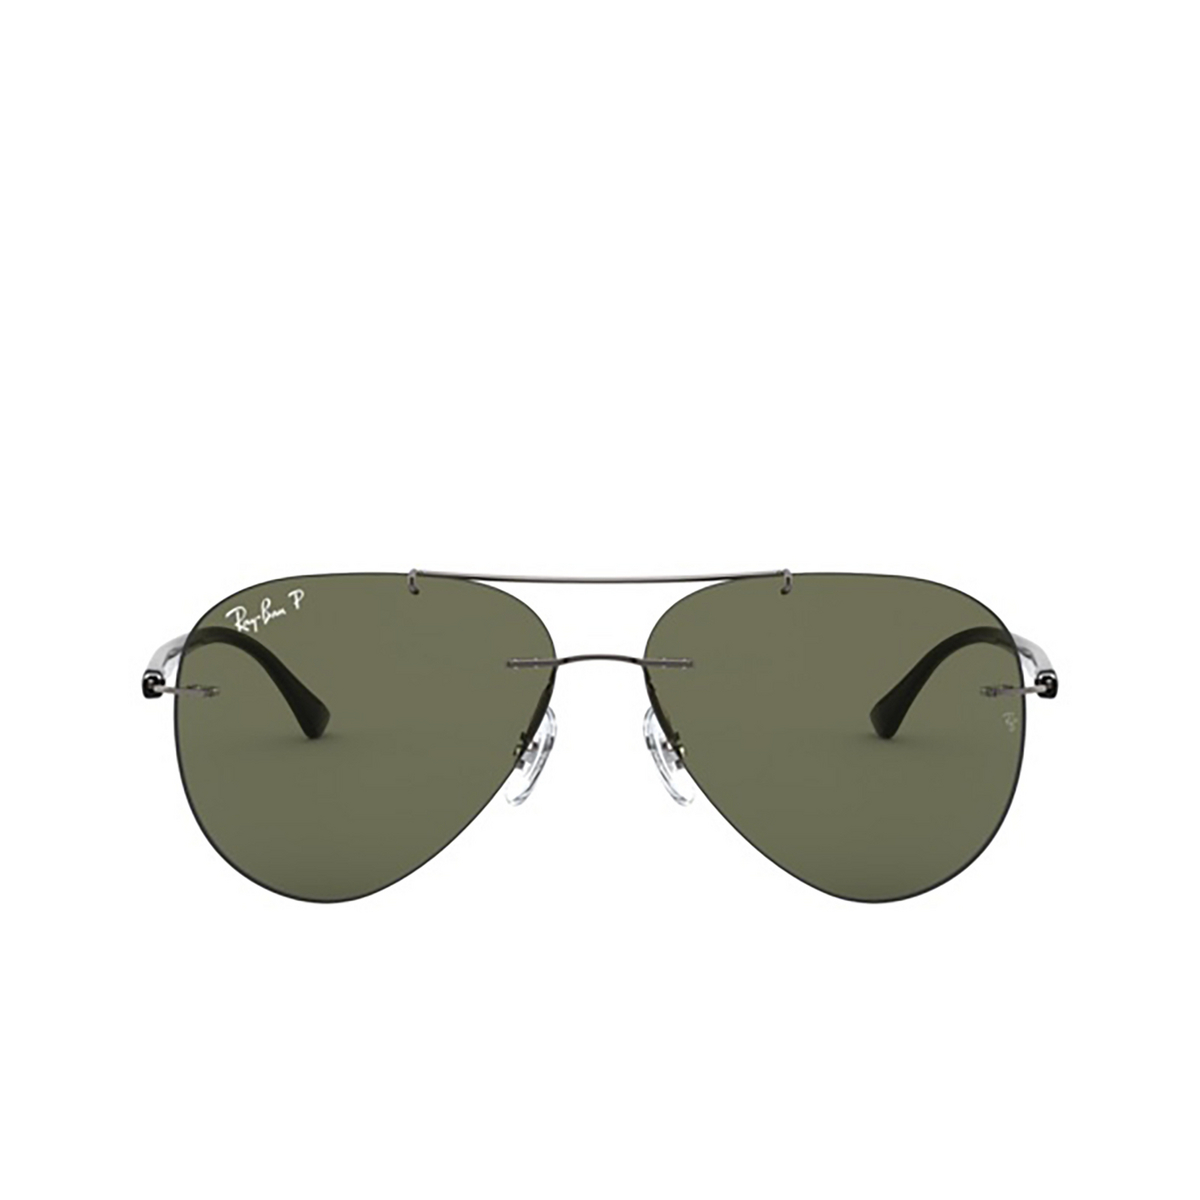 Ray-Ban® Aviator Sunglasses: RB8058 color 004/9A - 1/3